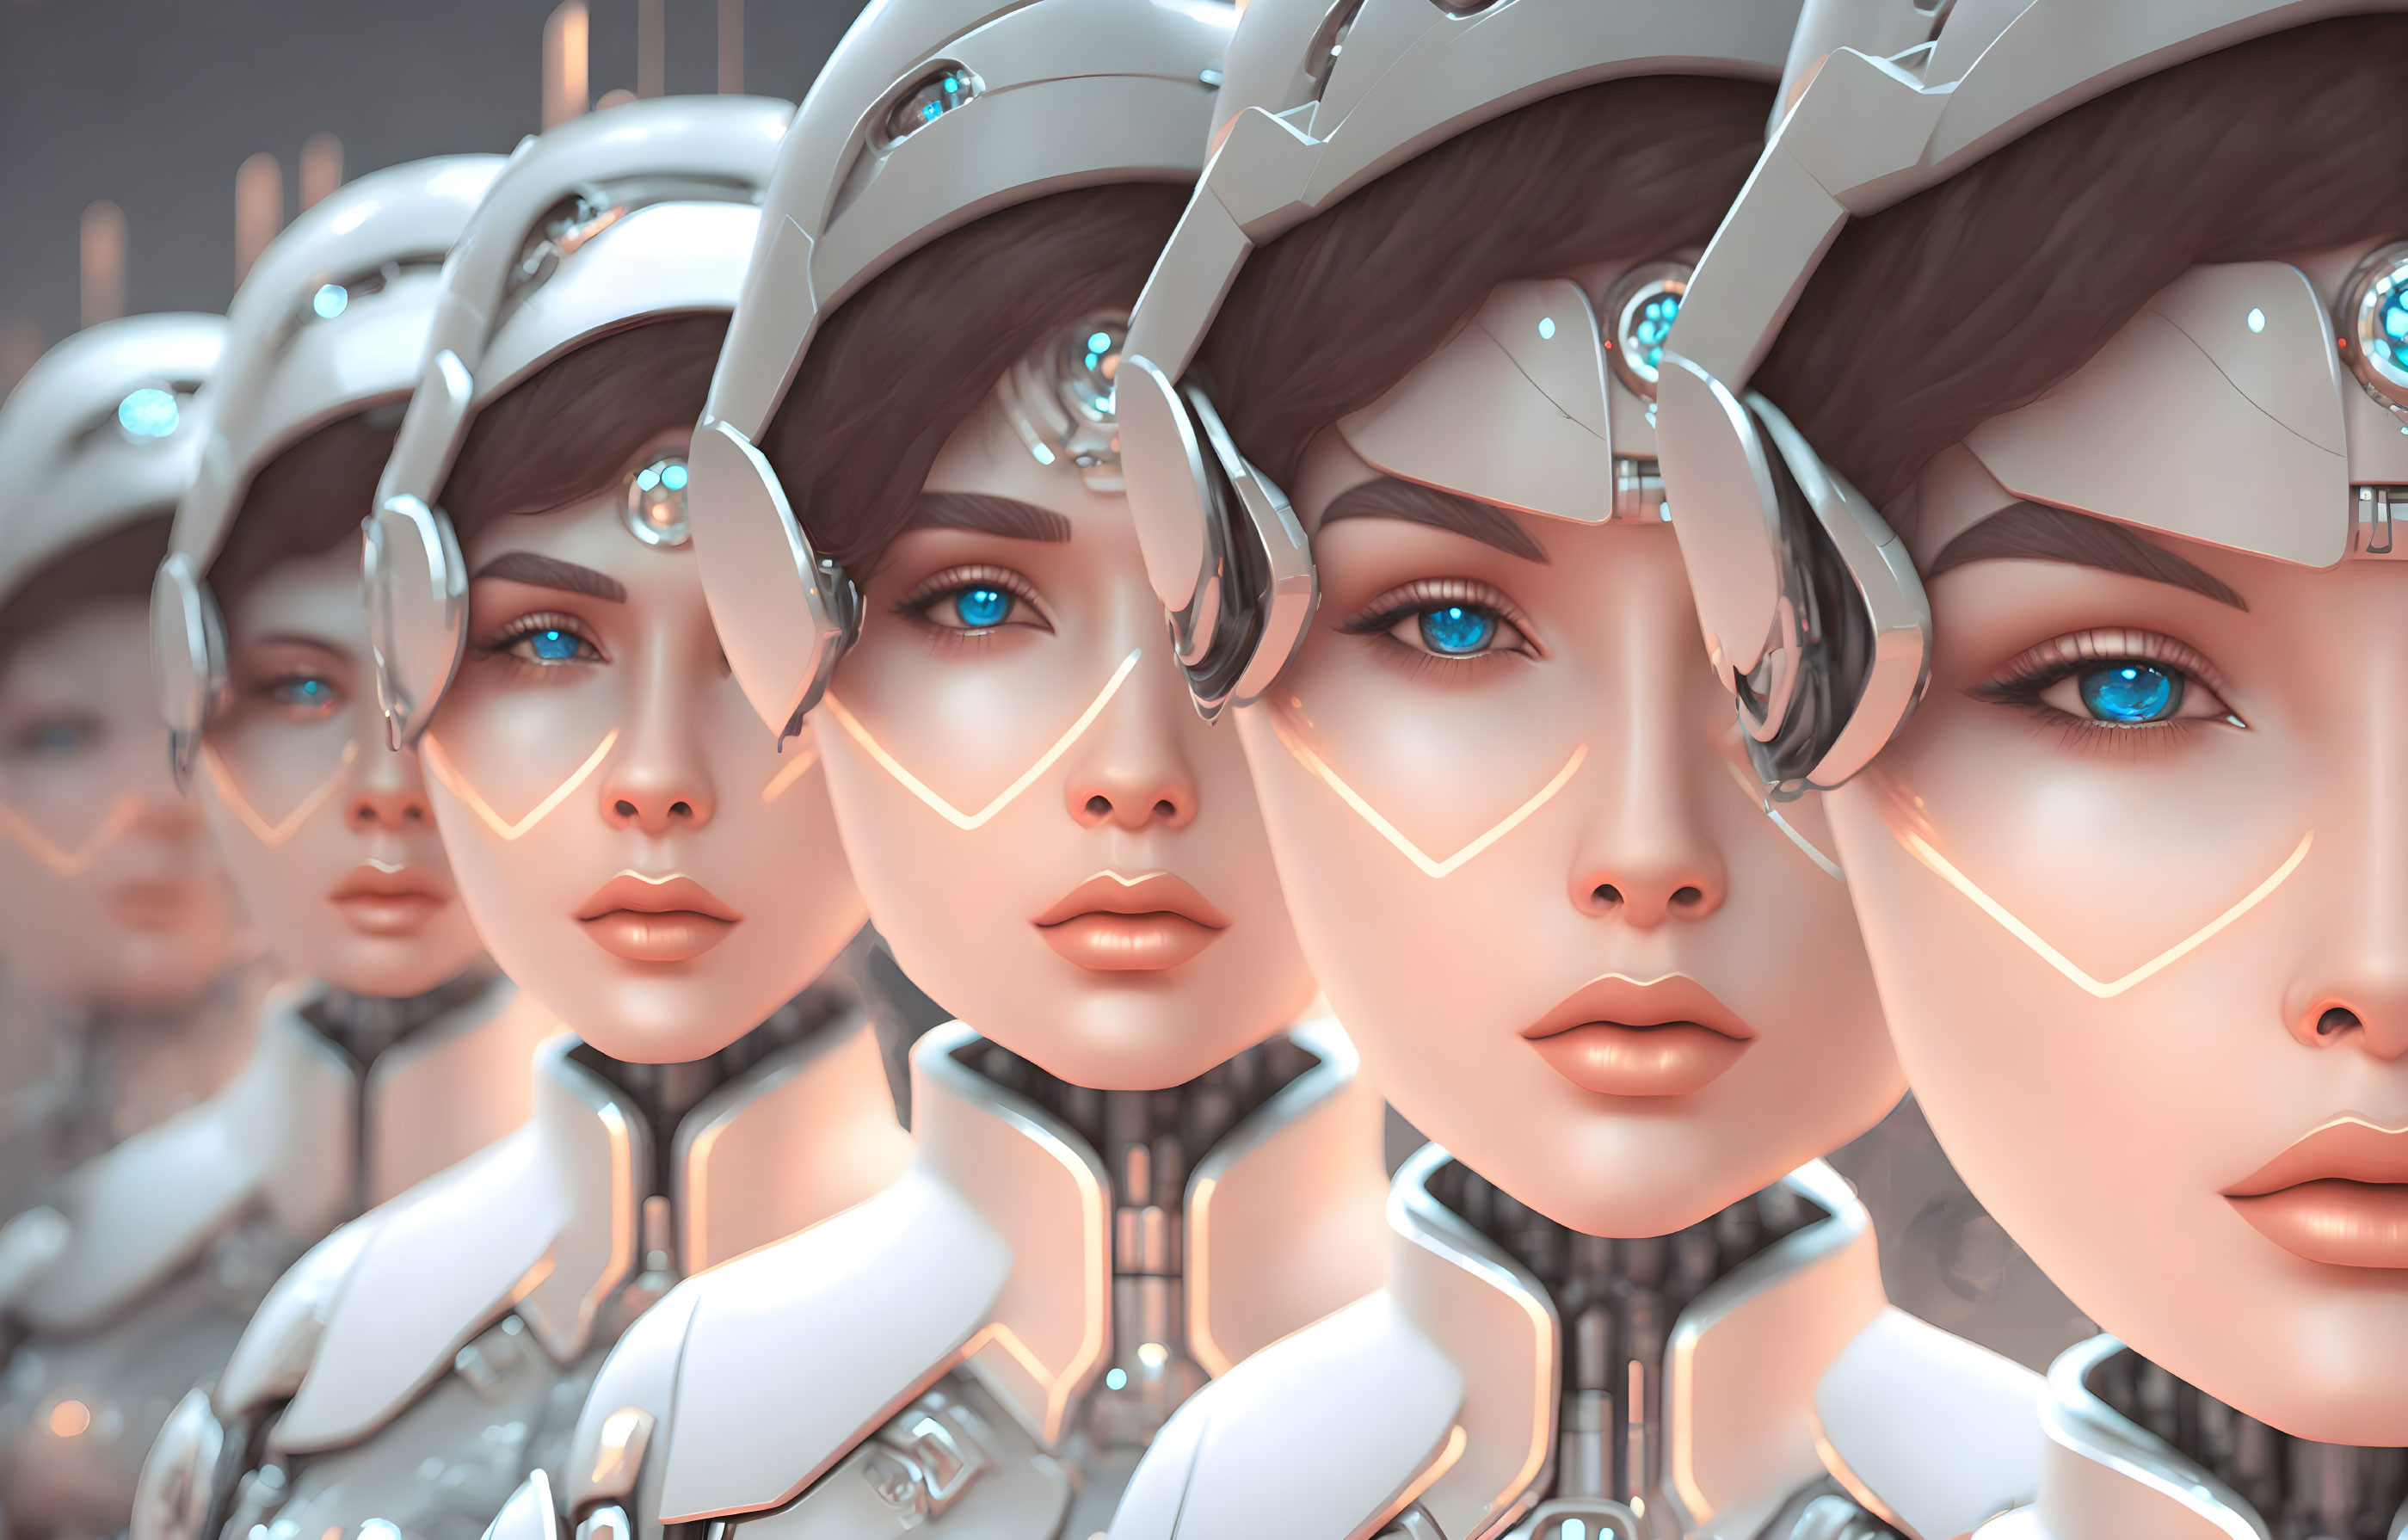 Row of Female Humanoid Robots in Futuristic Headgear